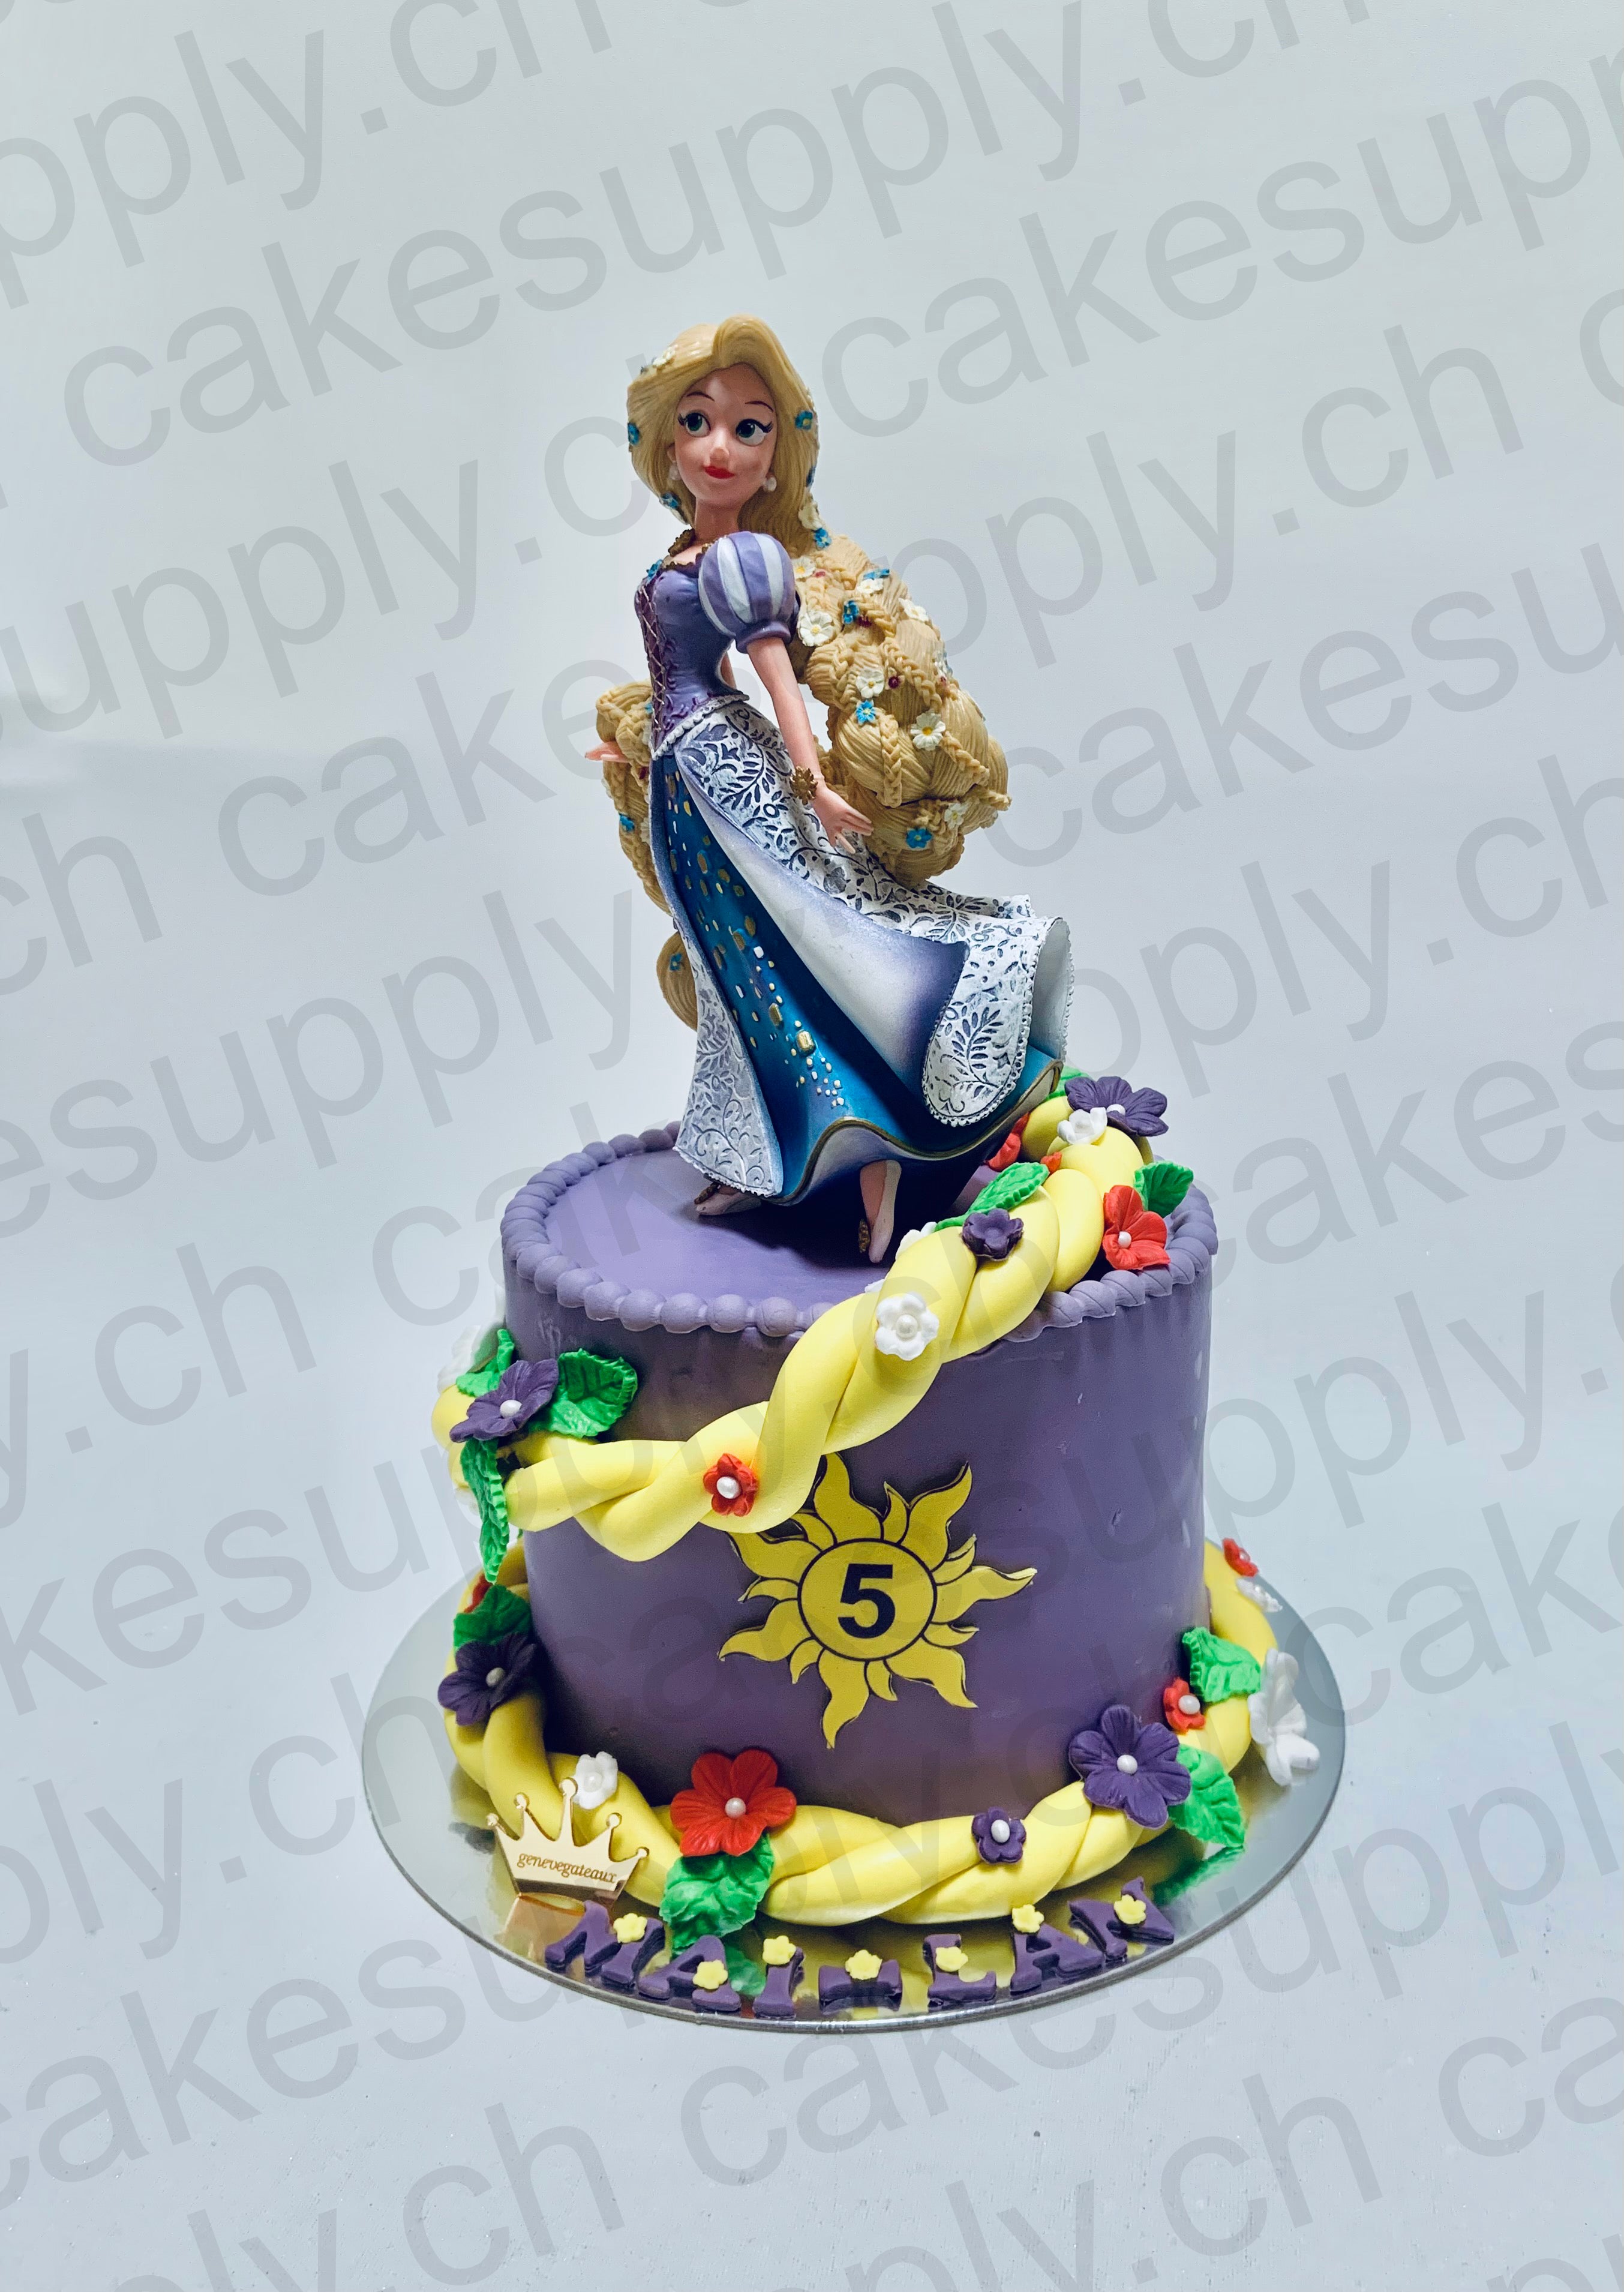 cakesupply.ch